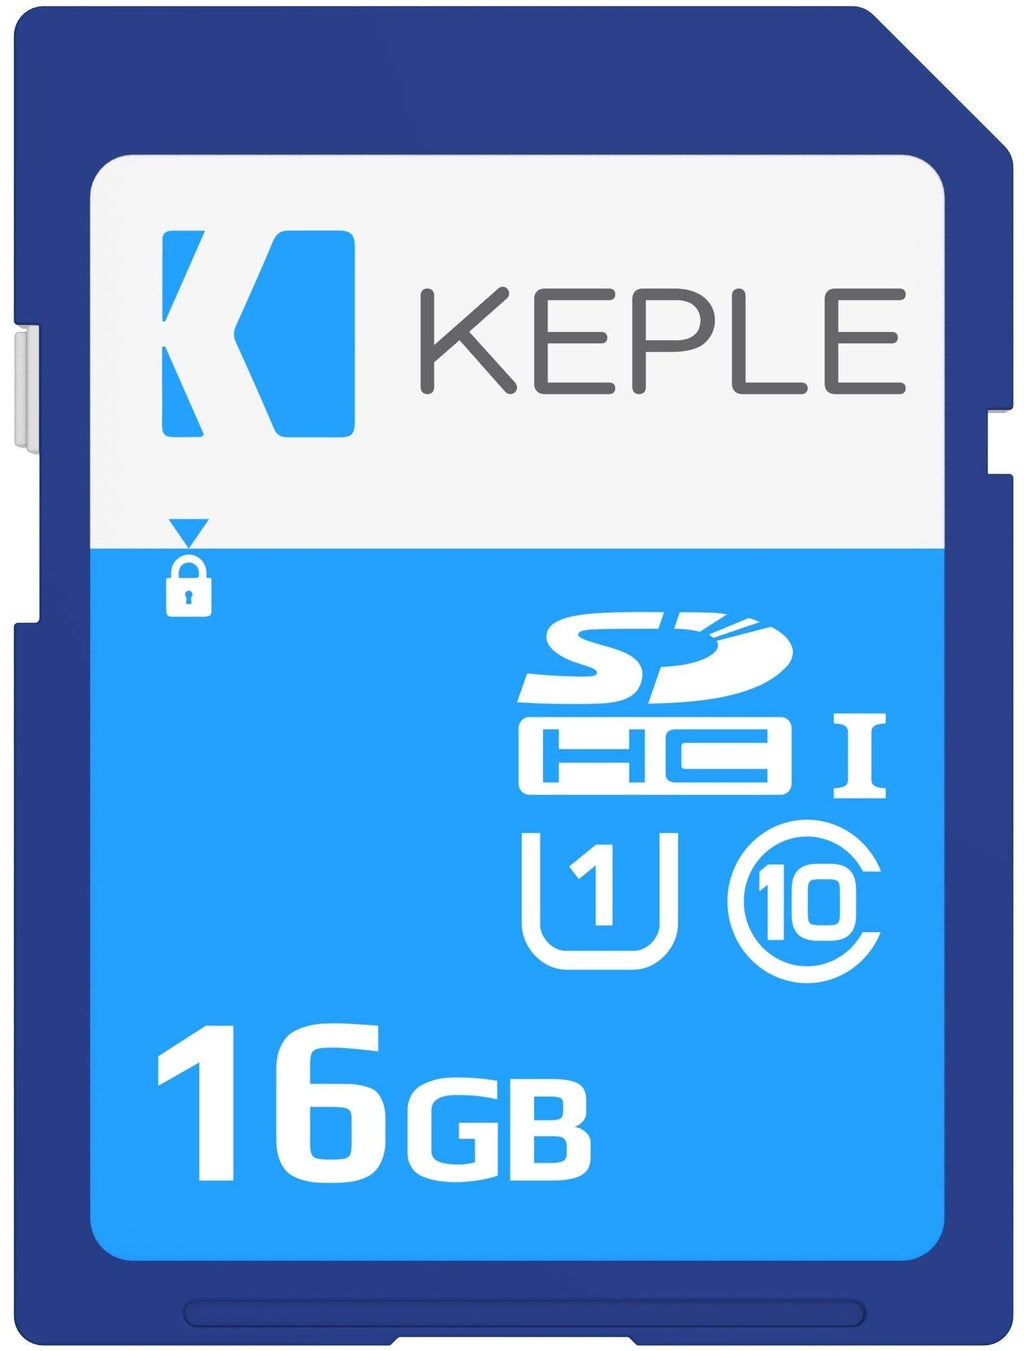 16GB SD Memory Card | SD Card Compatible with Fuji Finepix Series T400, T550, T500, XP150, XP50, XP60, XP200, XP70, XP80, XQ2, X-T10, Xa2, X-T1, X30, X100T DSLR Camera | 16 GB 16GB